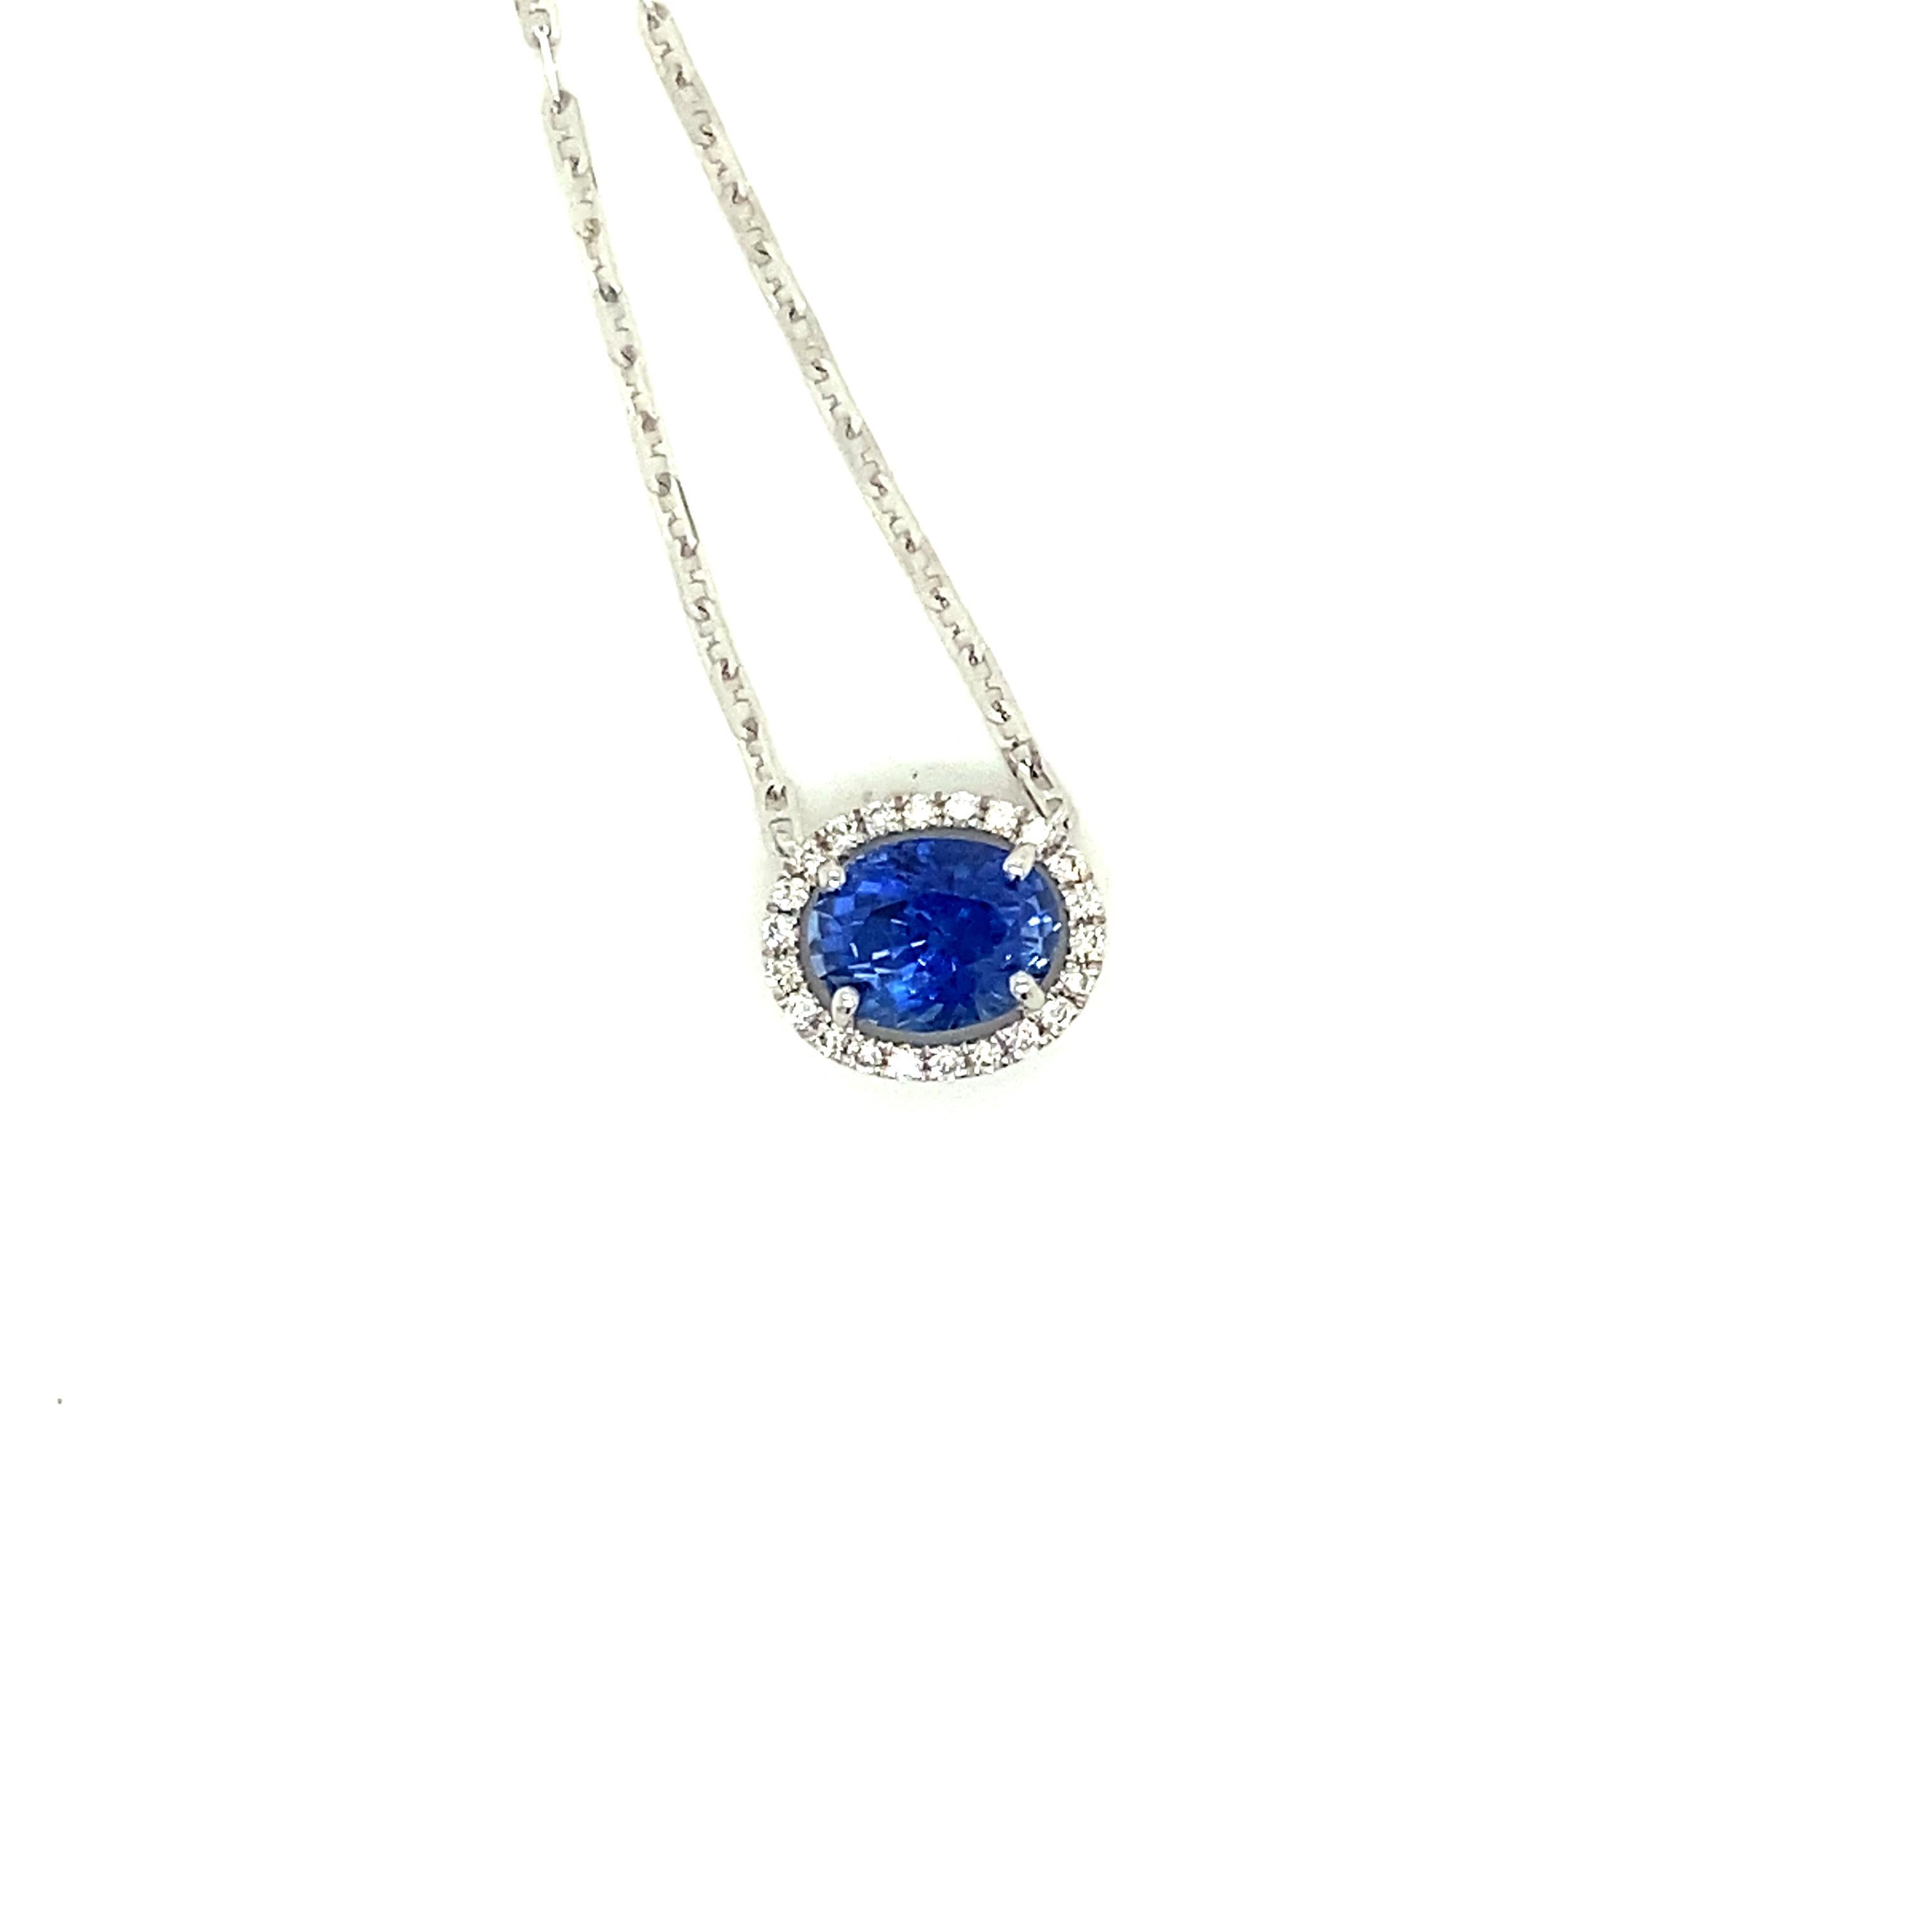 Oval Cut 1.82Carat Vivid Blue Sapphire and Diamond Pendant Necklace For Sale